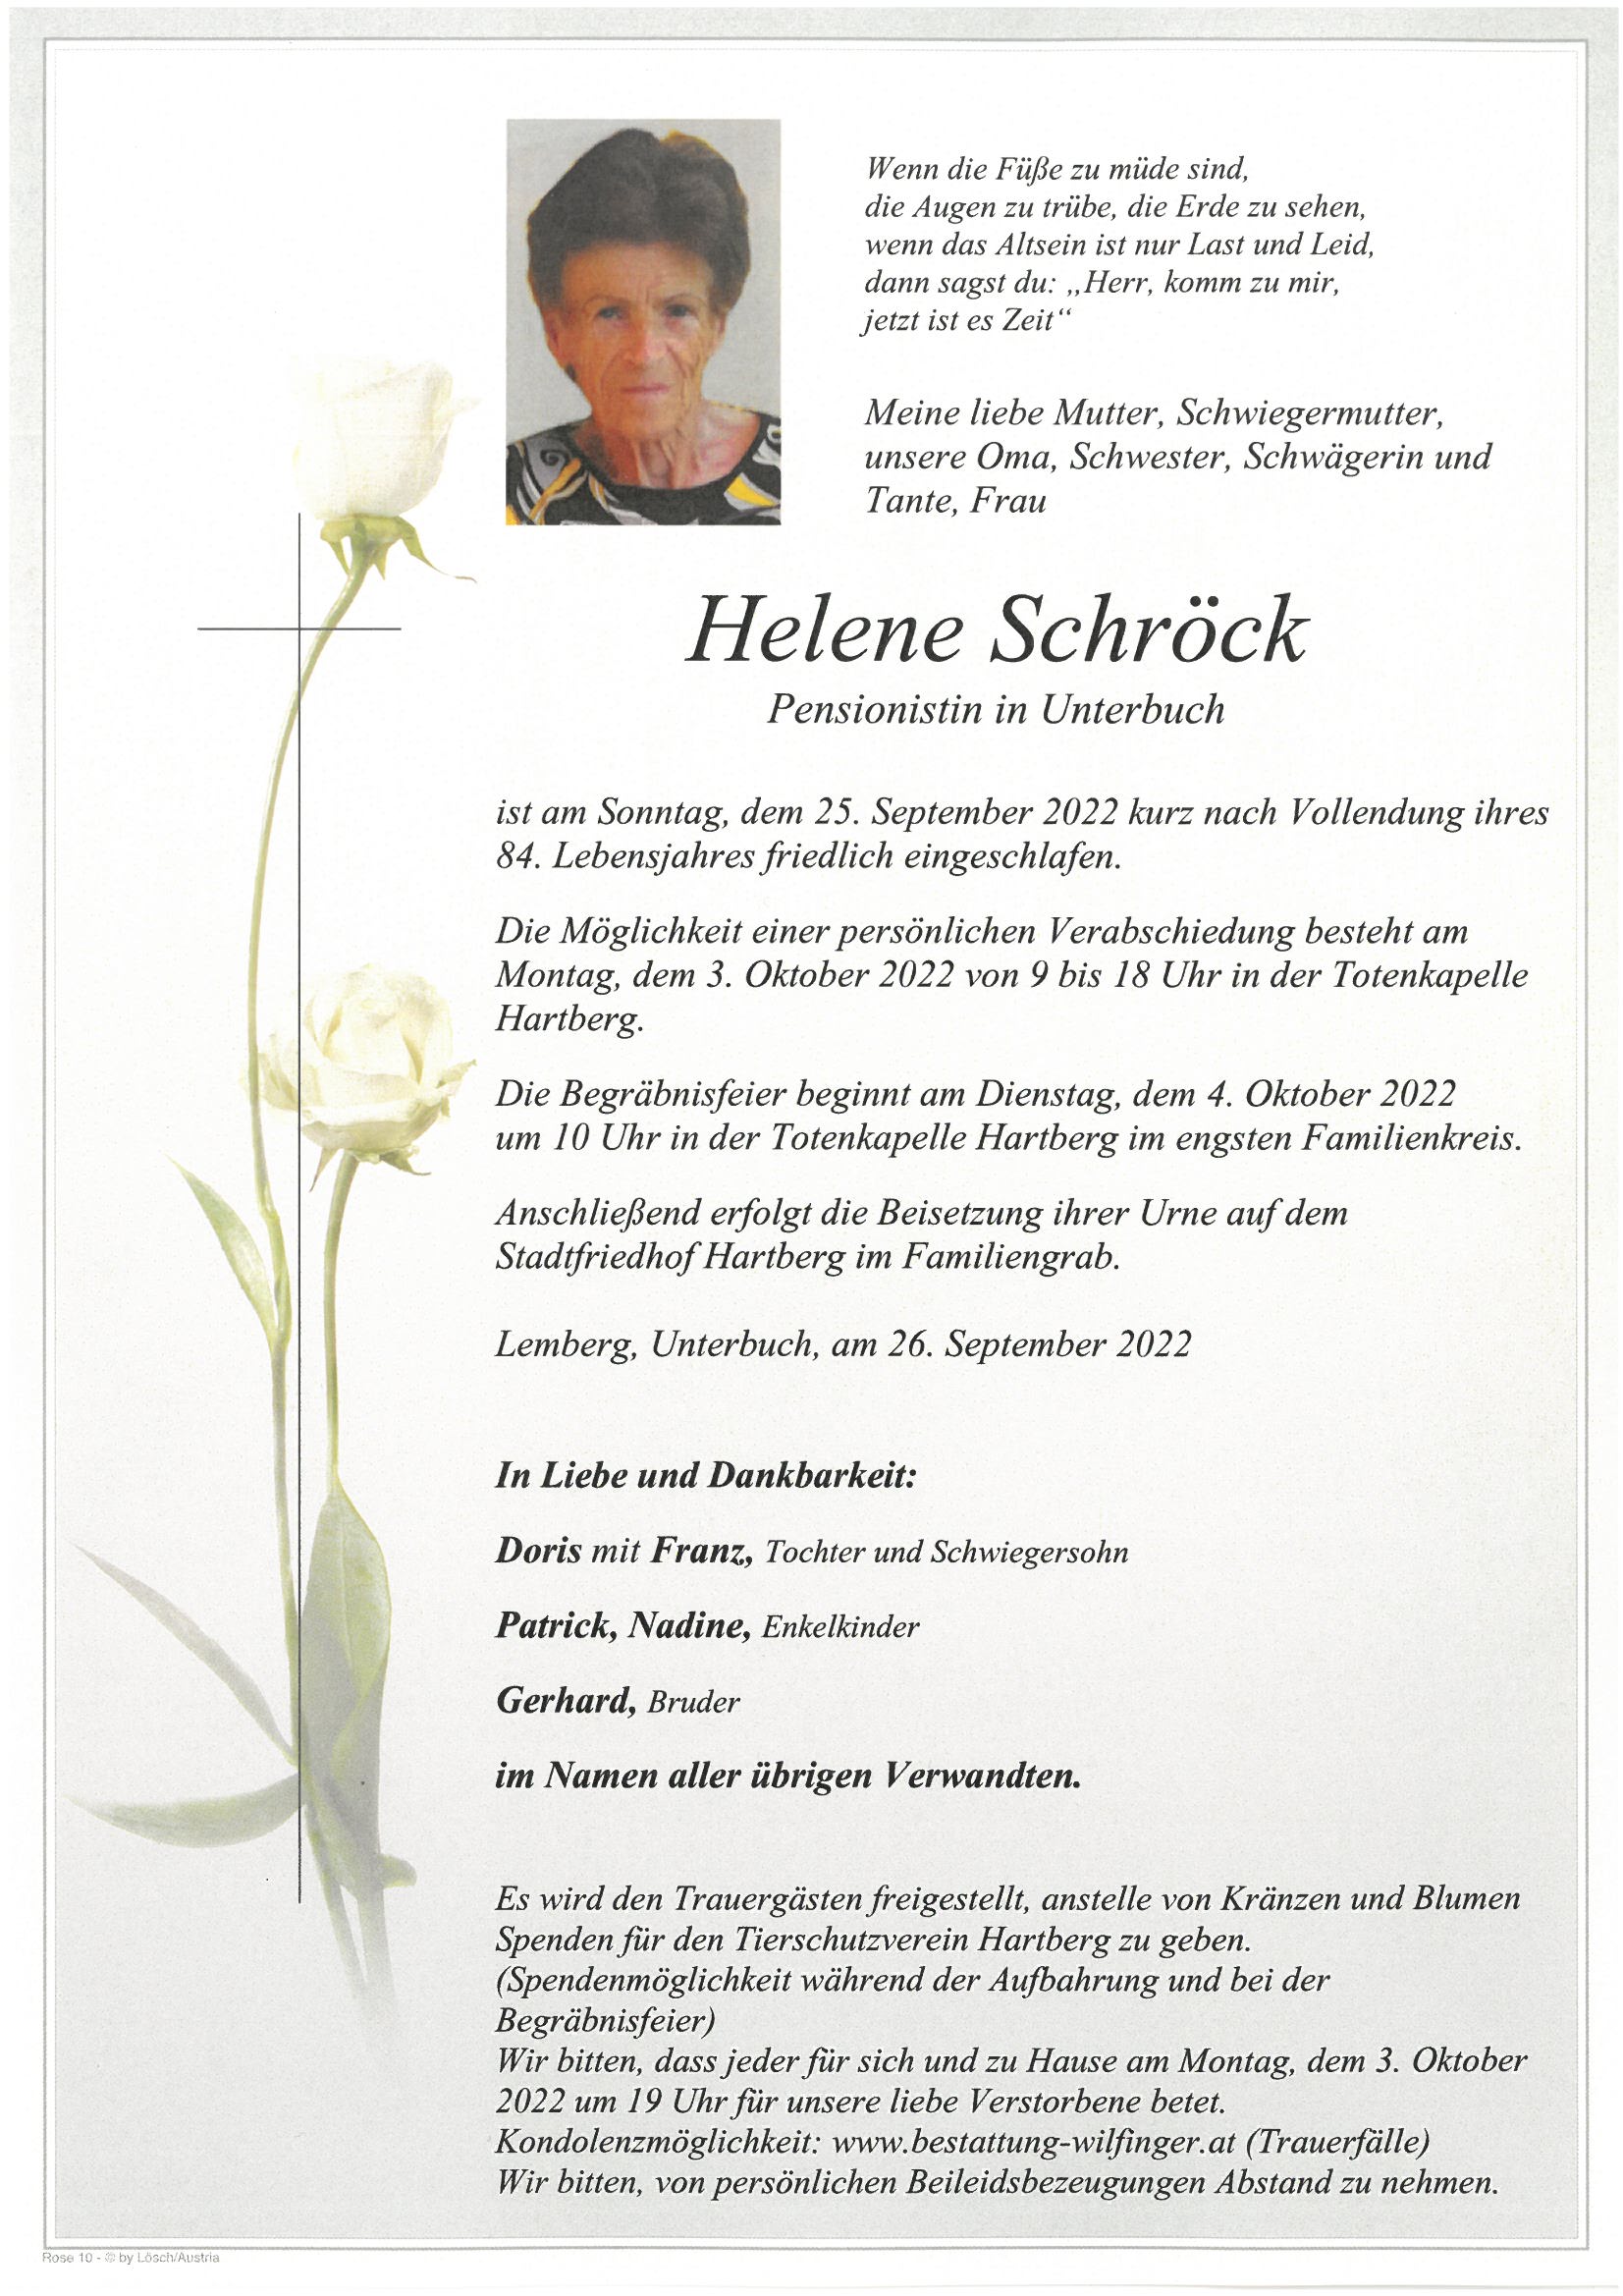 Helene Schröck